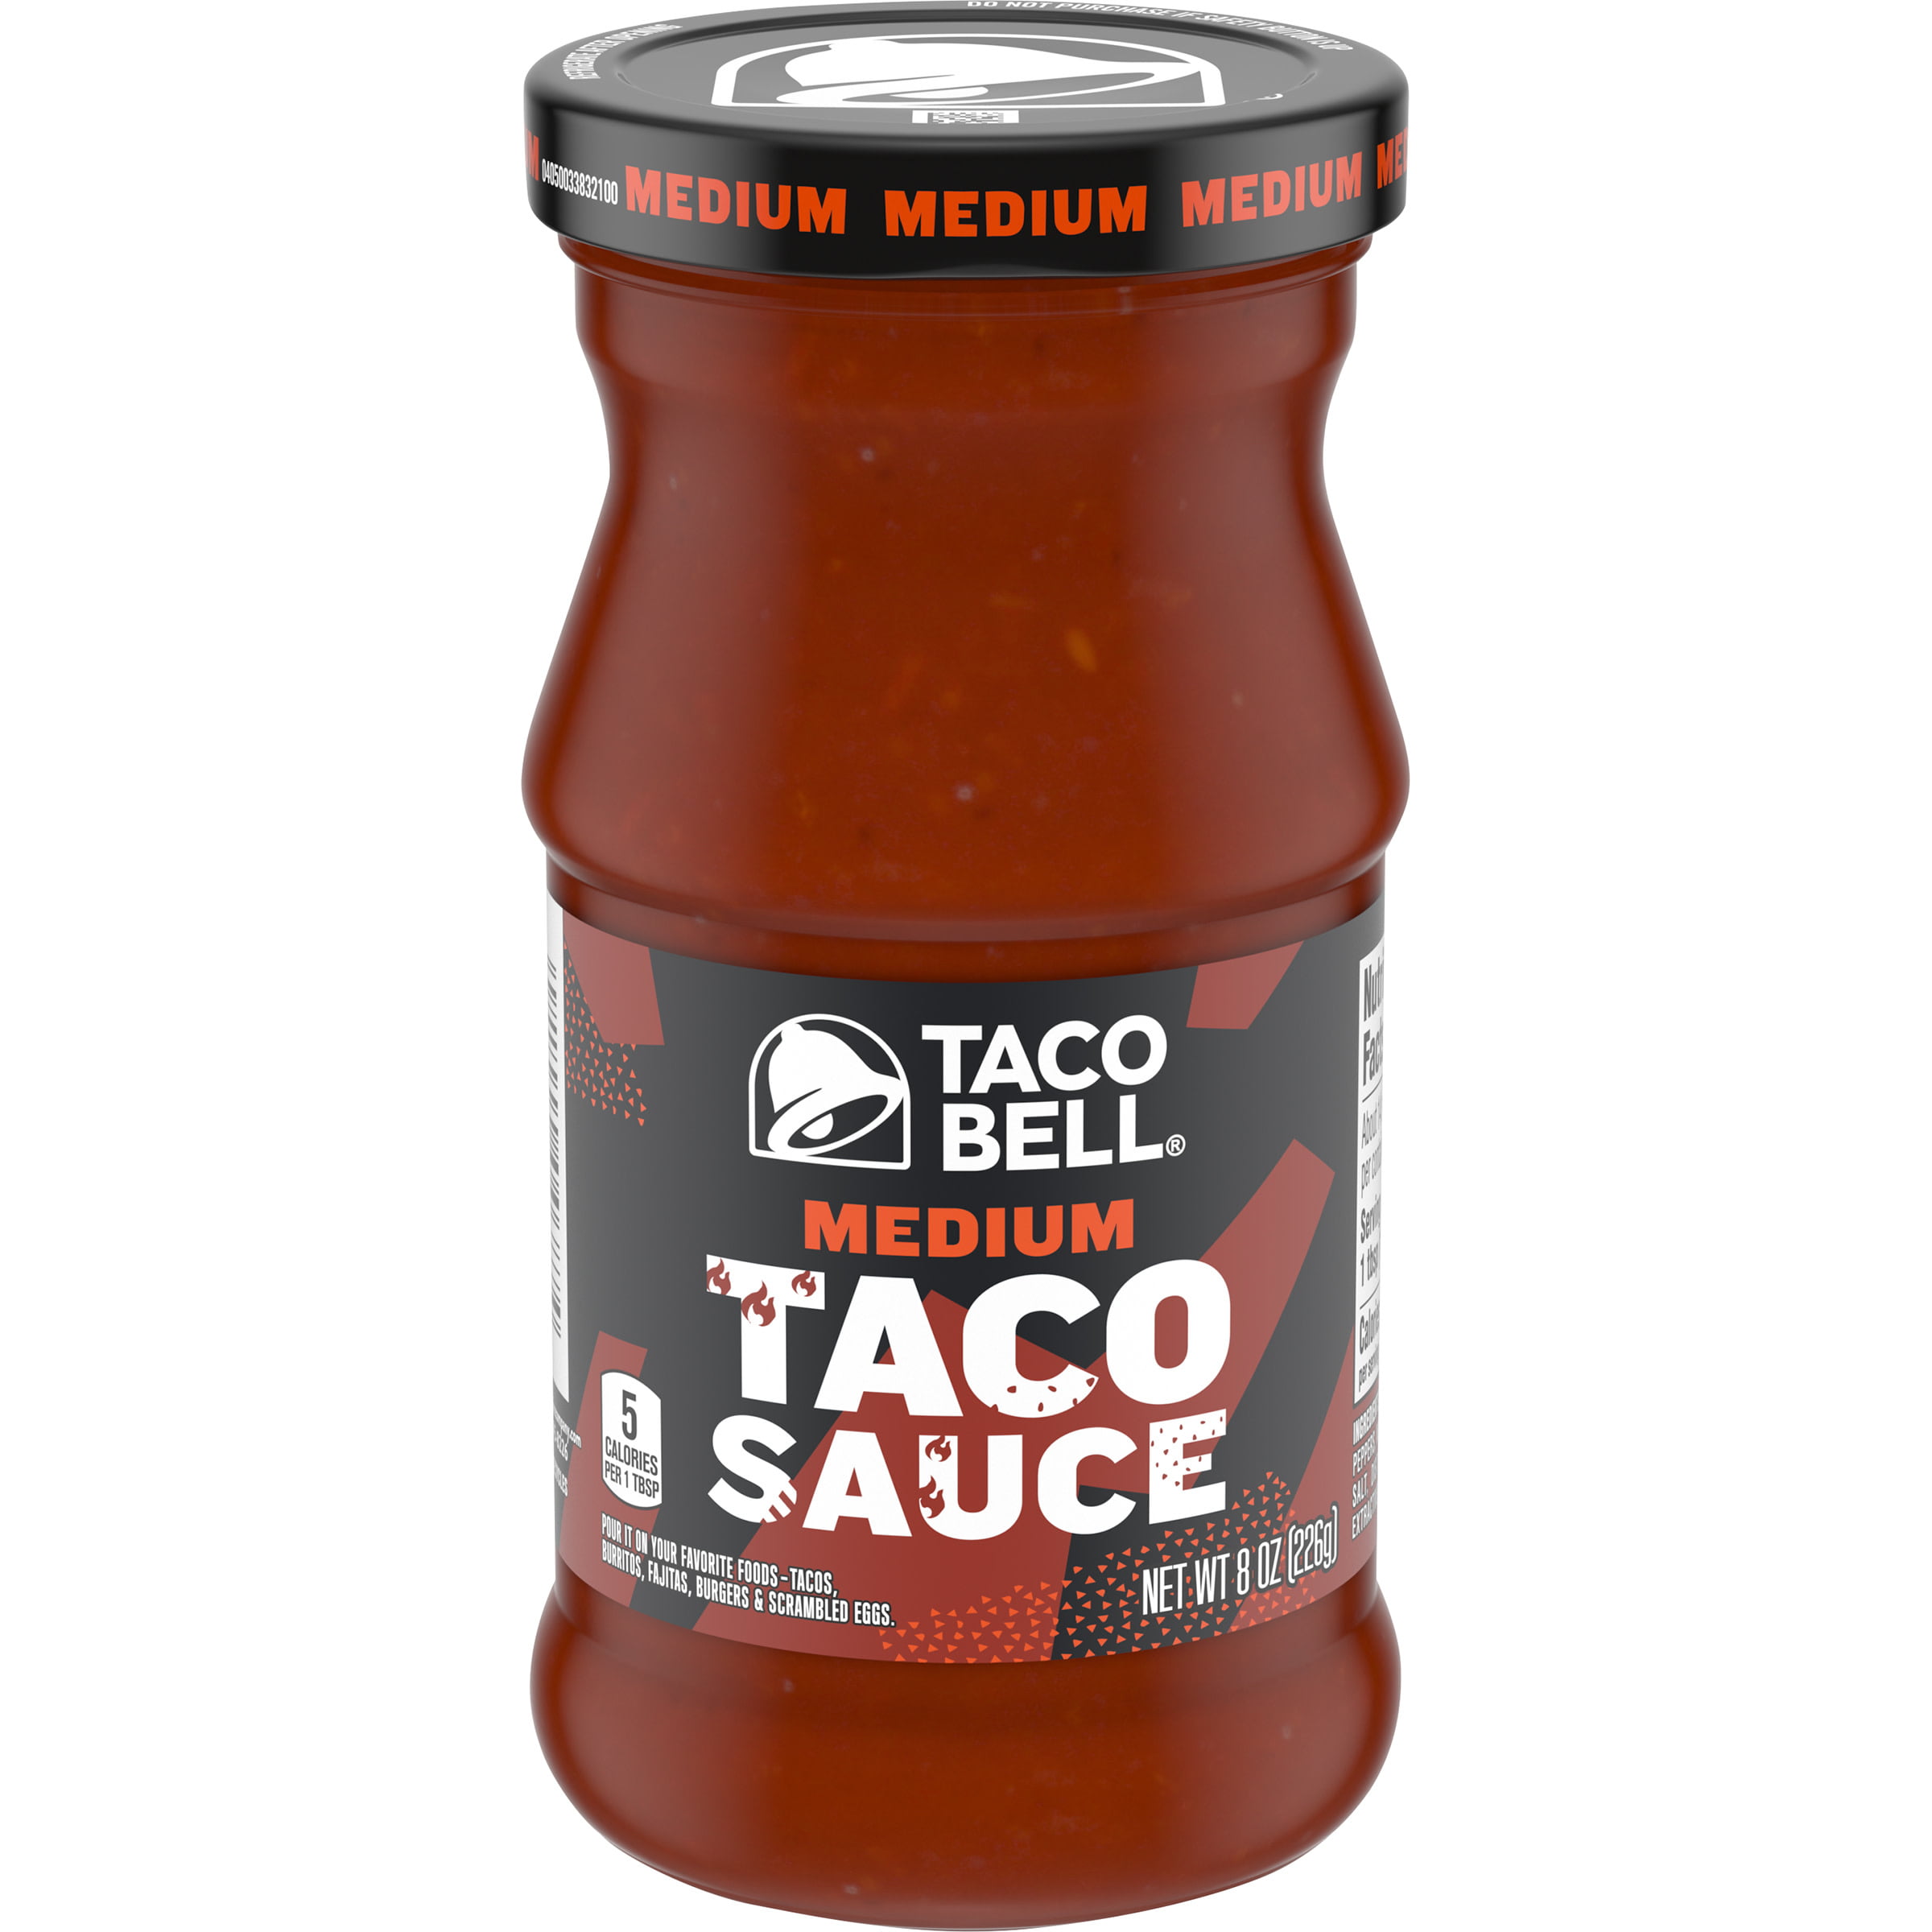 Taco Bell Medium Taco Sauce, 8 oz Bottle